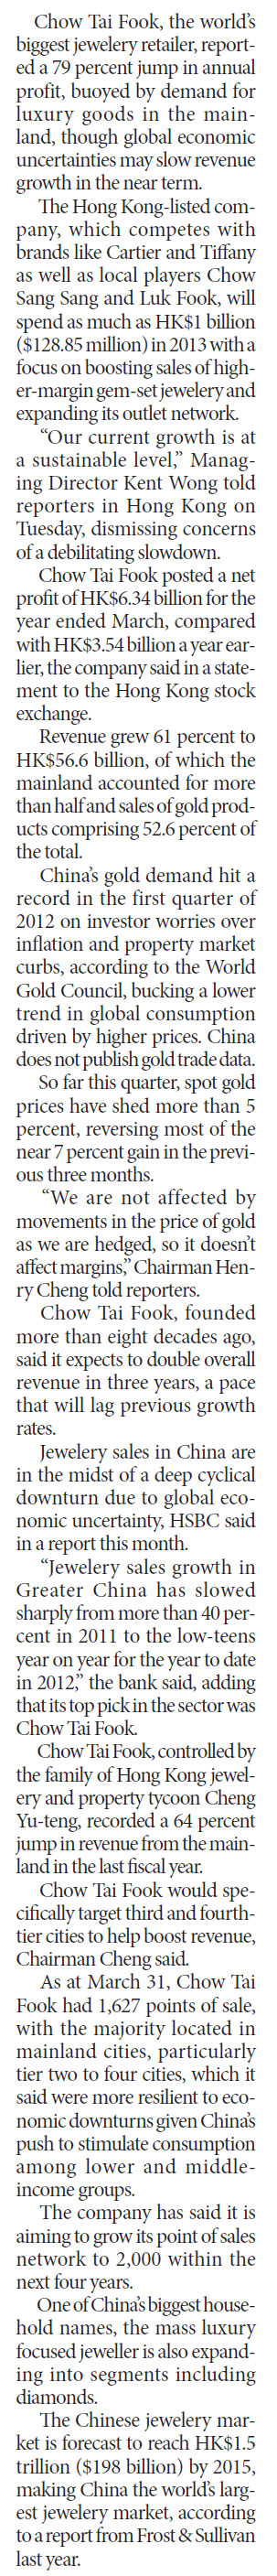 Mainland demand lifts Chow Tai Fook